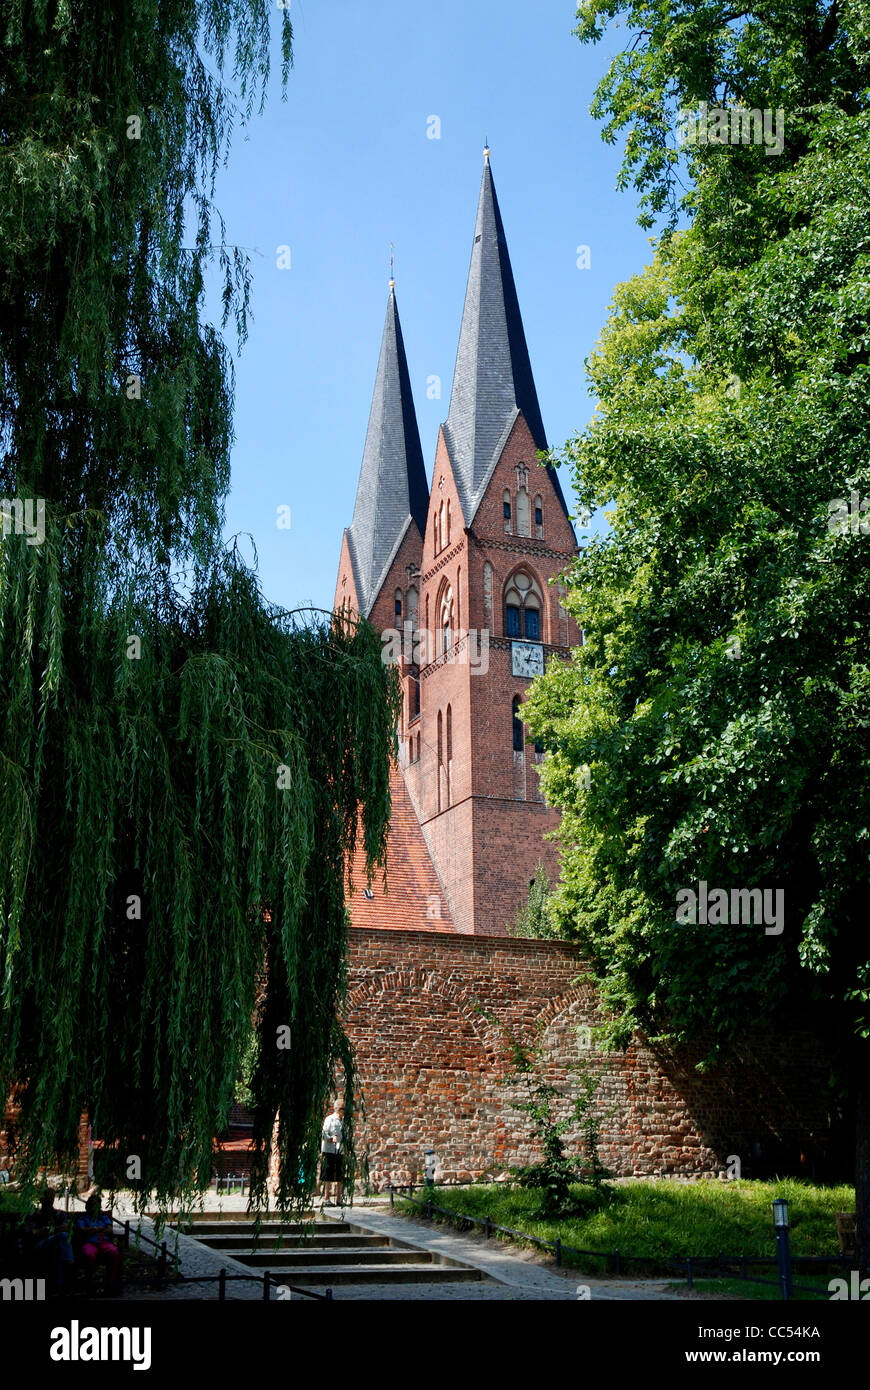 Monastery church Saint Trinitatis in the city of Neuruppin in Brandenburg. Stock Photo